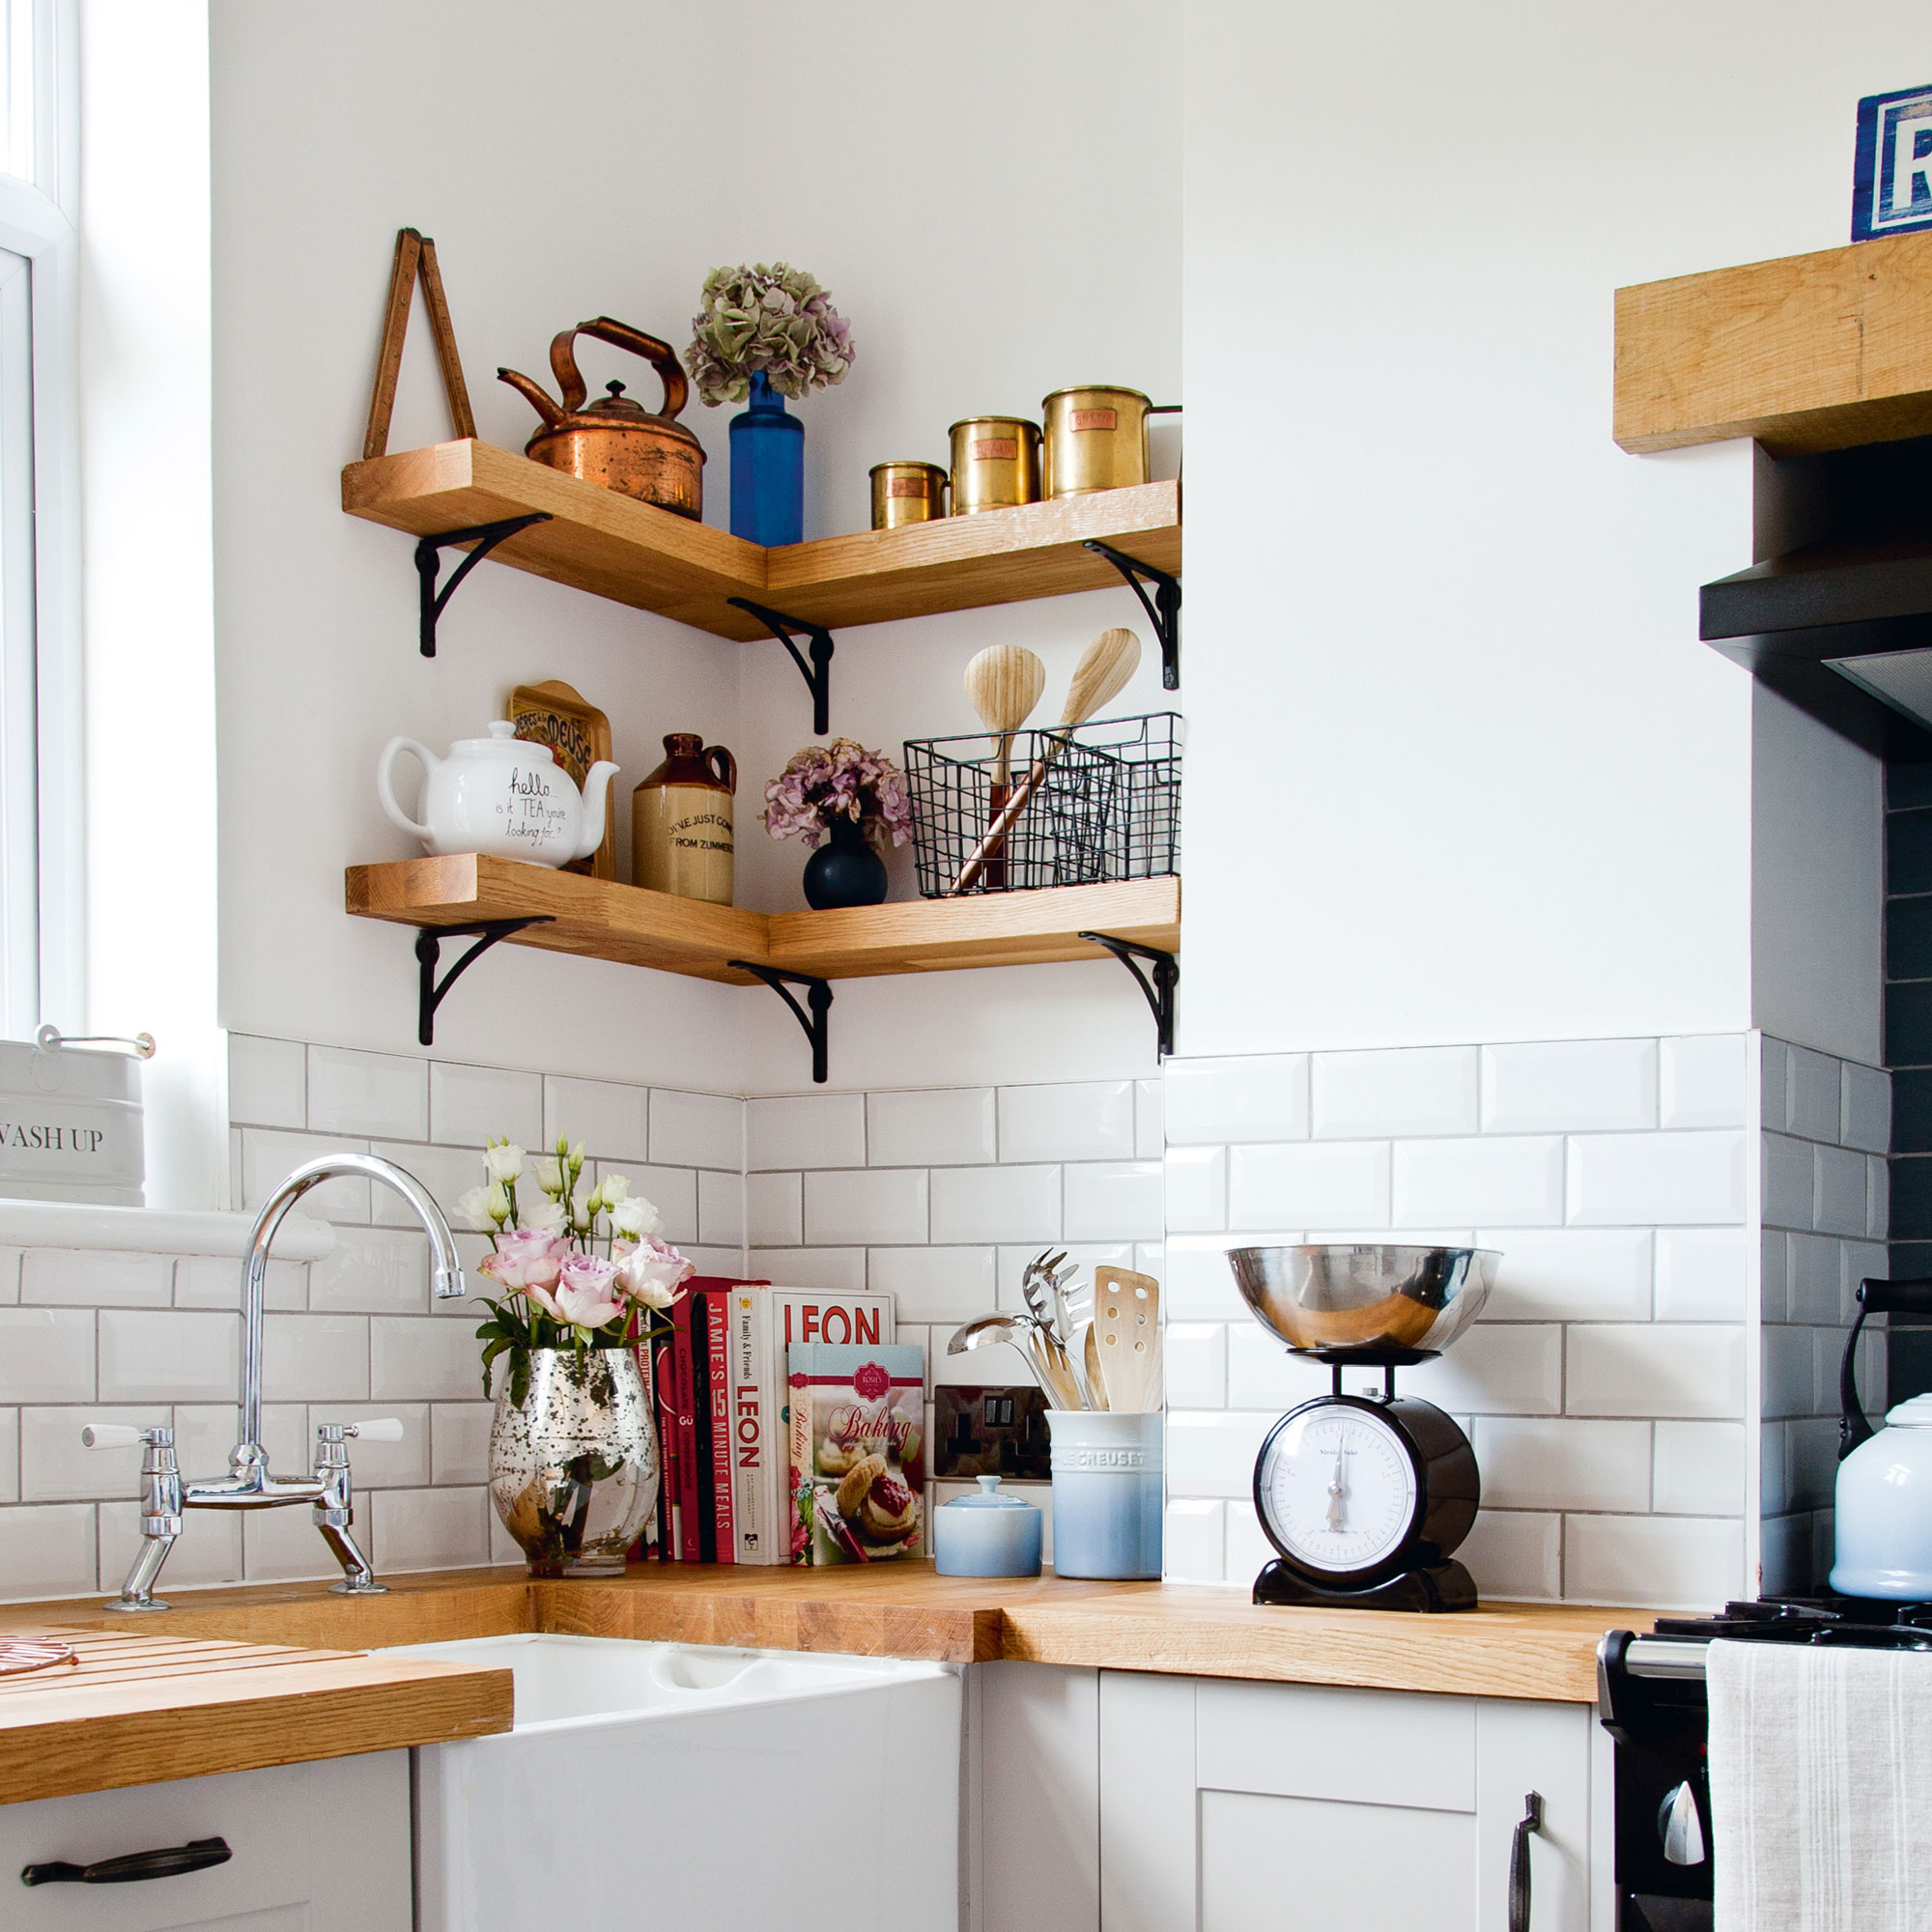 Laurence Llewelyn-Bowen's small kitchen design secret | Ideal Home